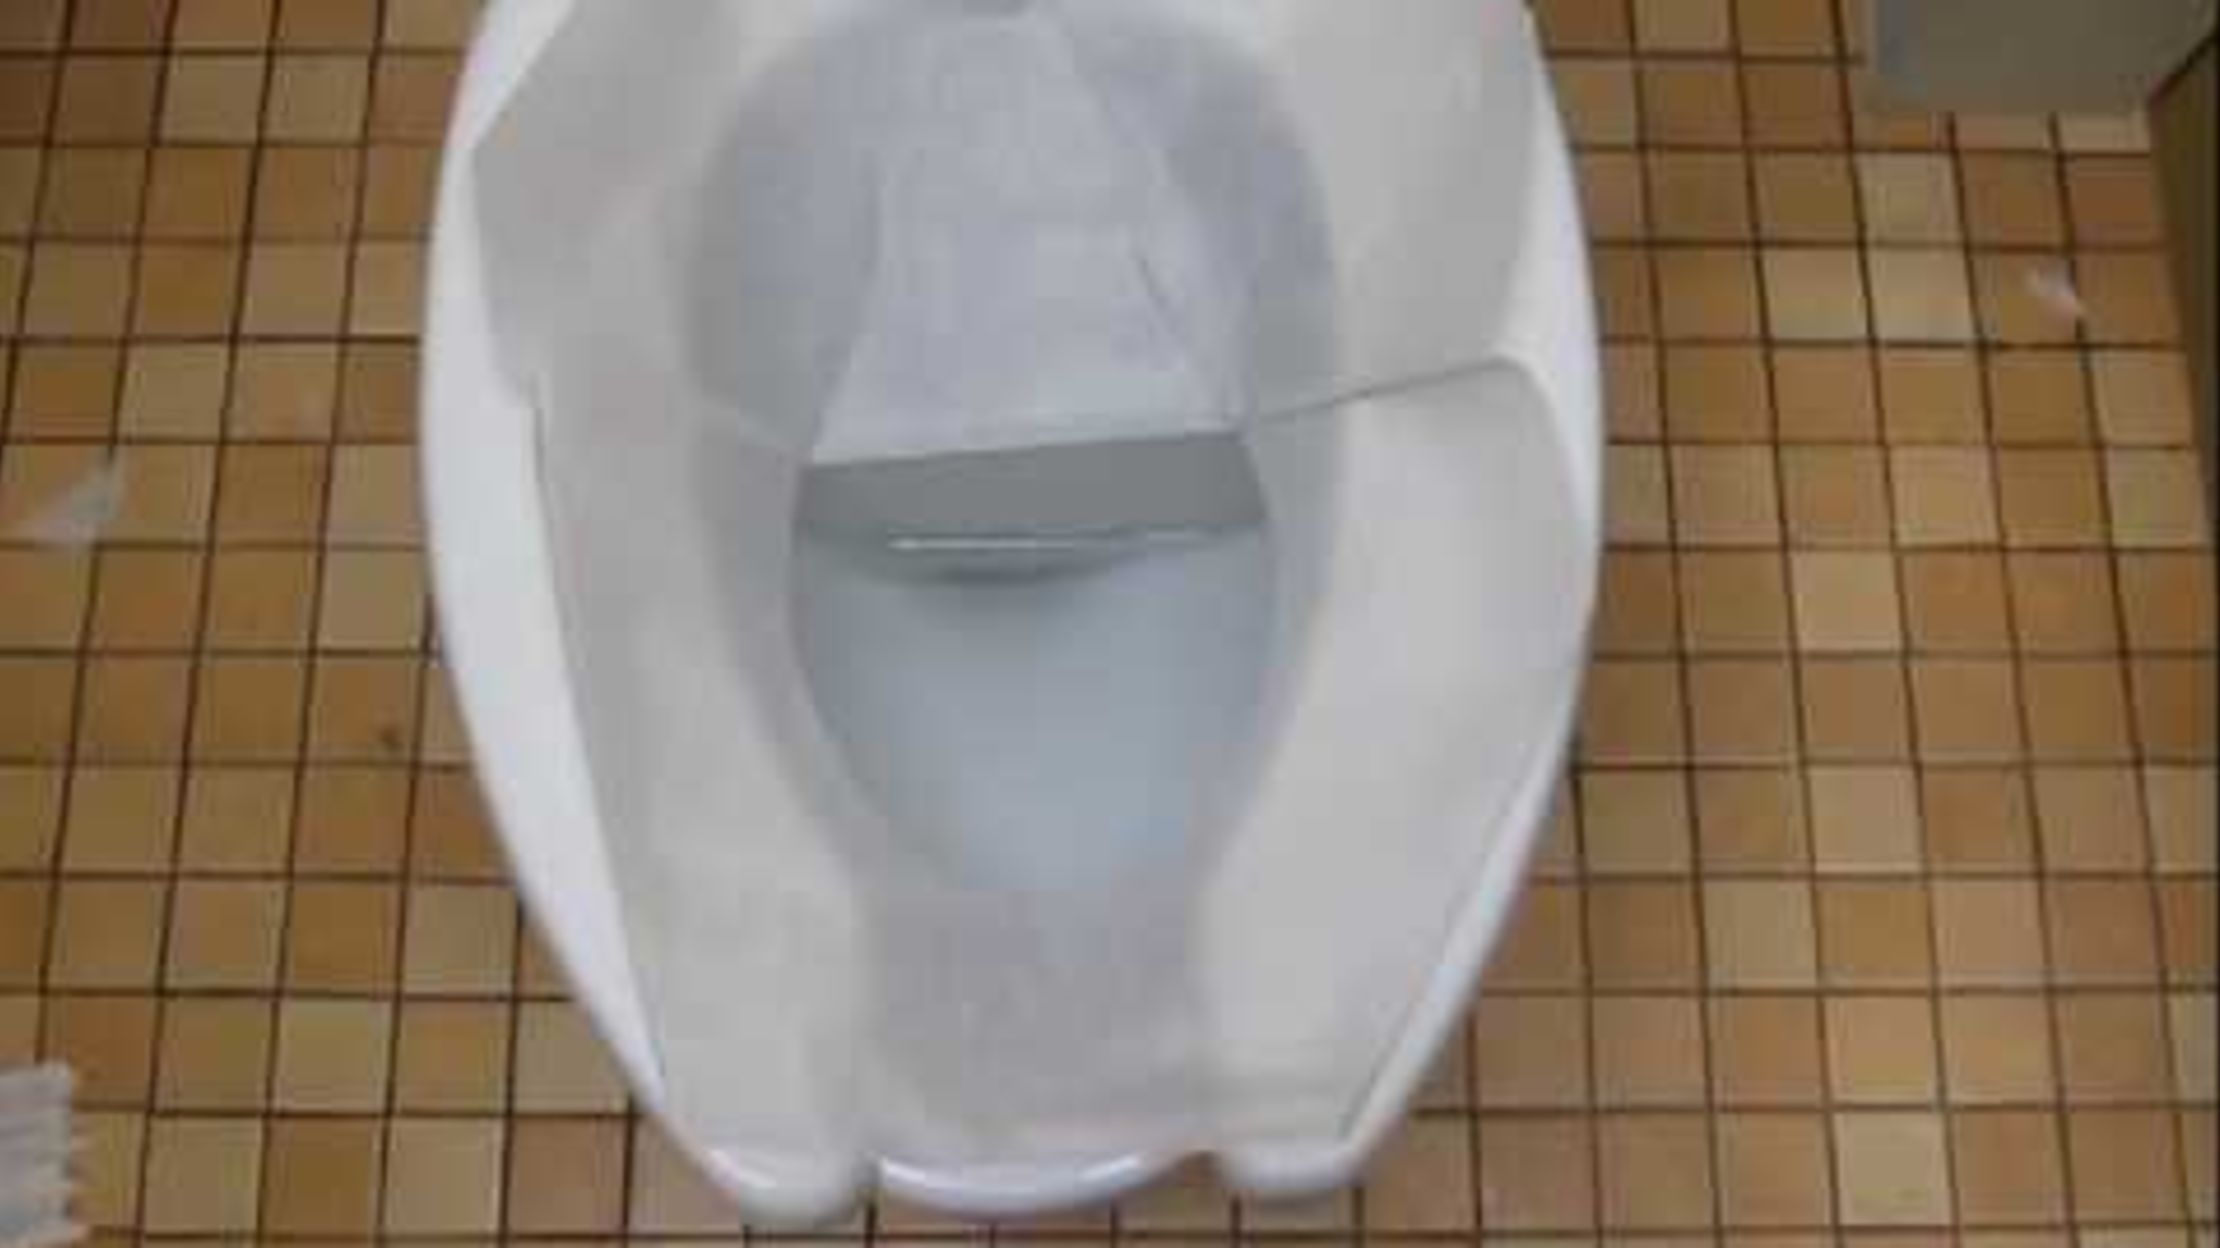 latrine seat